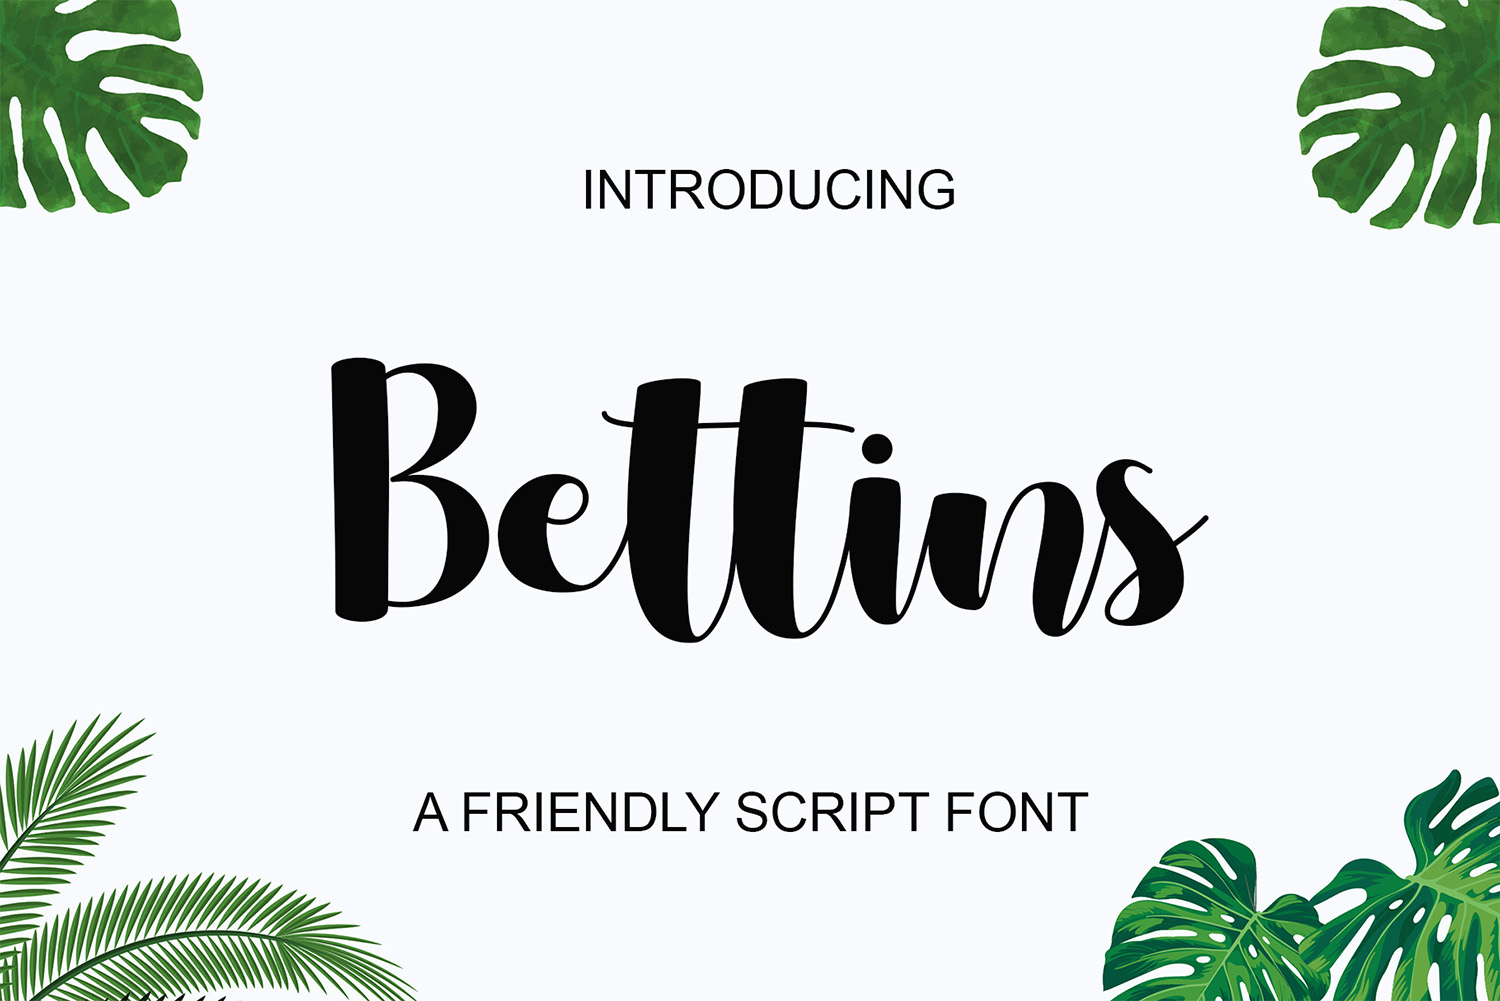 Bettins Free Font